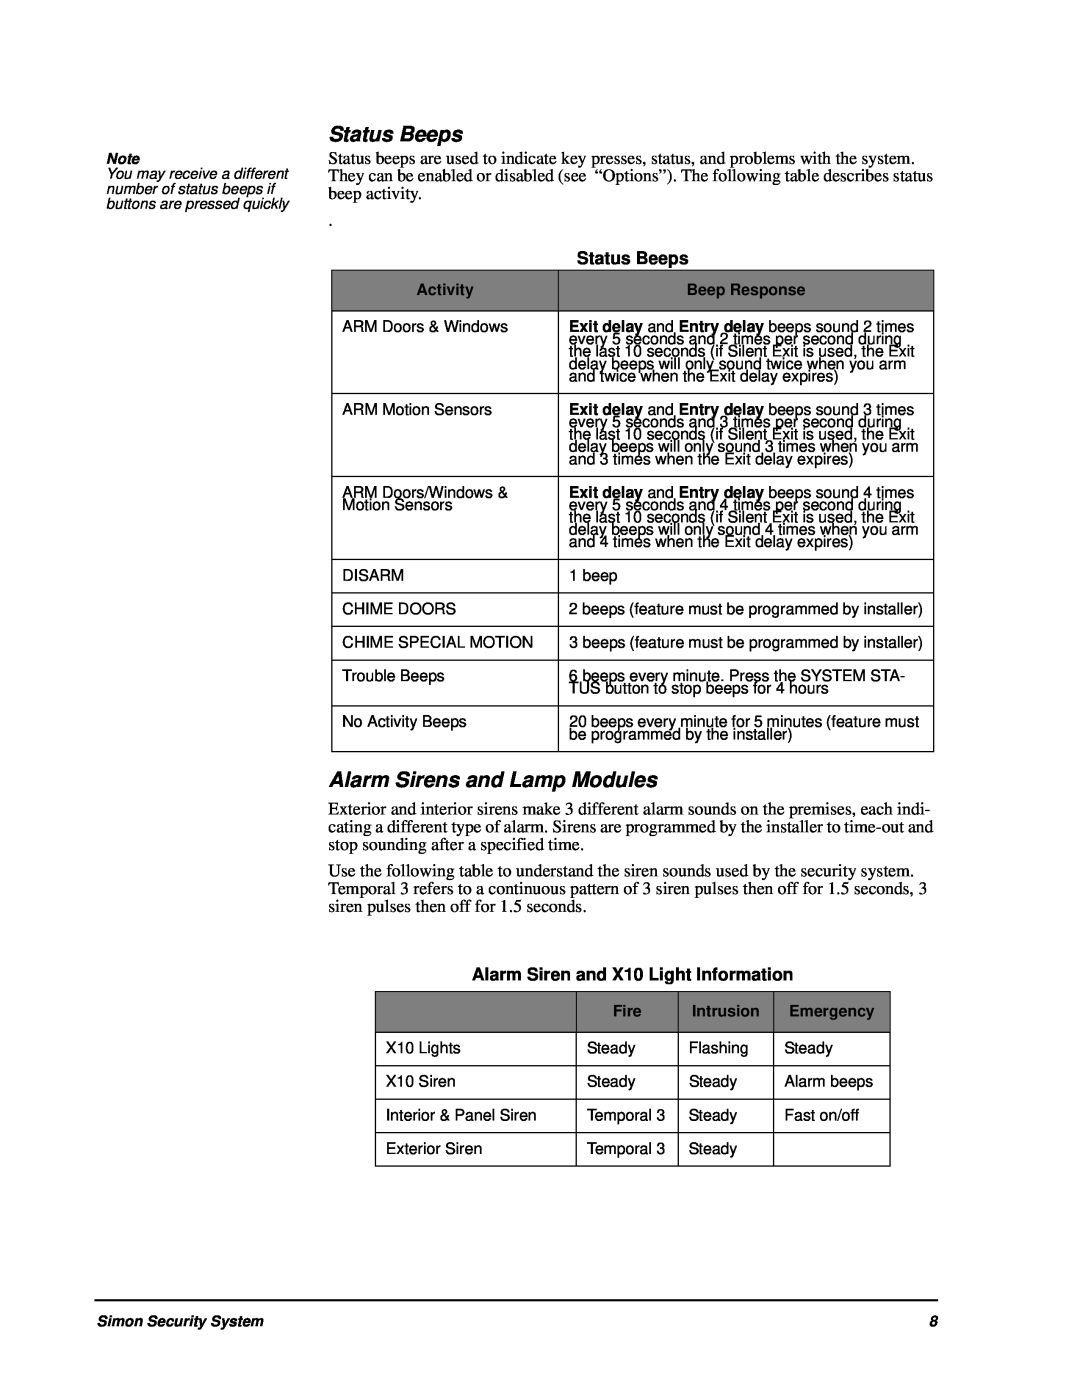 GE 60-875 manual Status Beeps, Alarm Sirens and Lamp Modules, Alarm Siren and X10 Light Information 